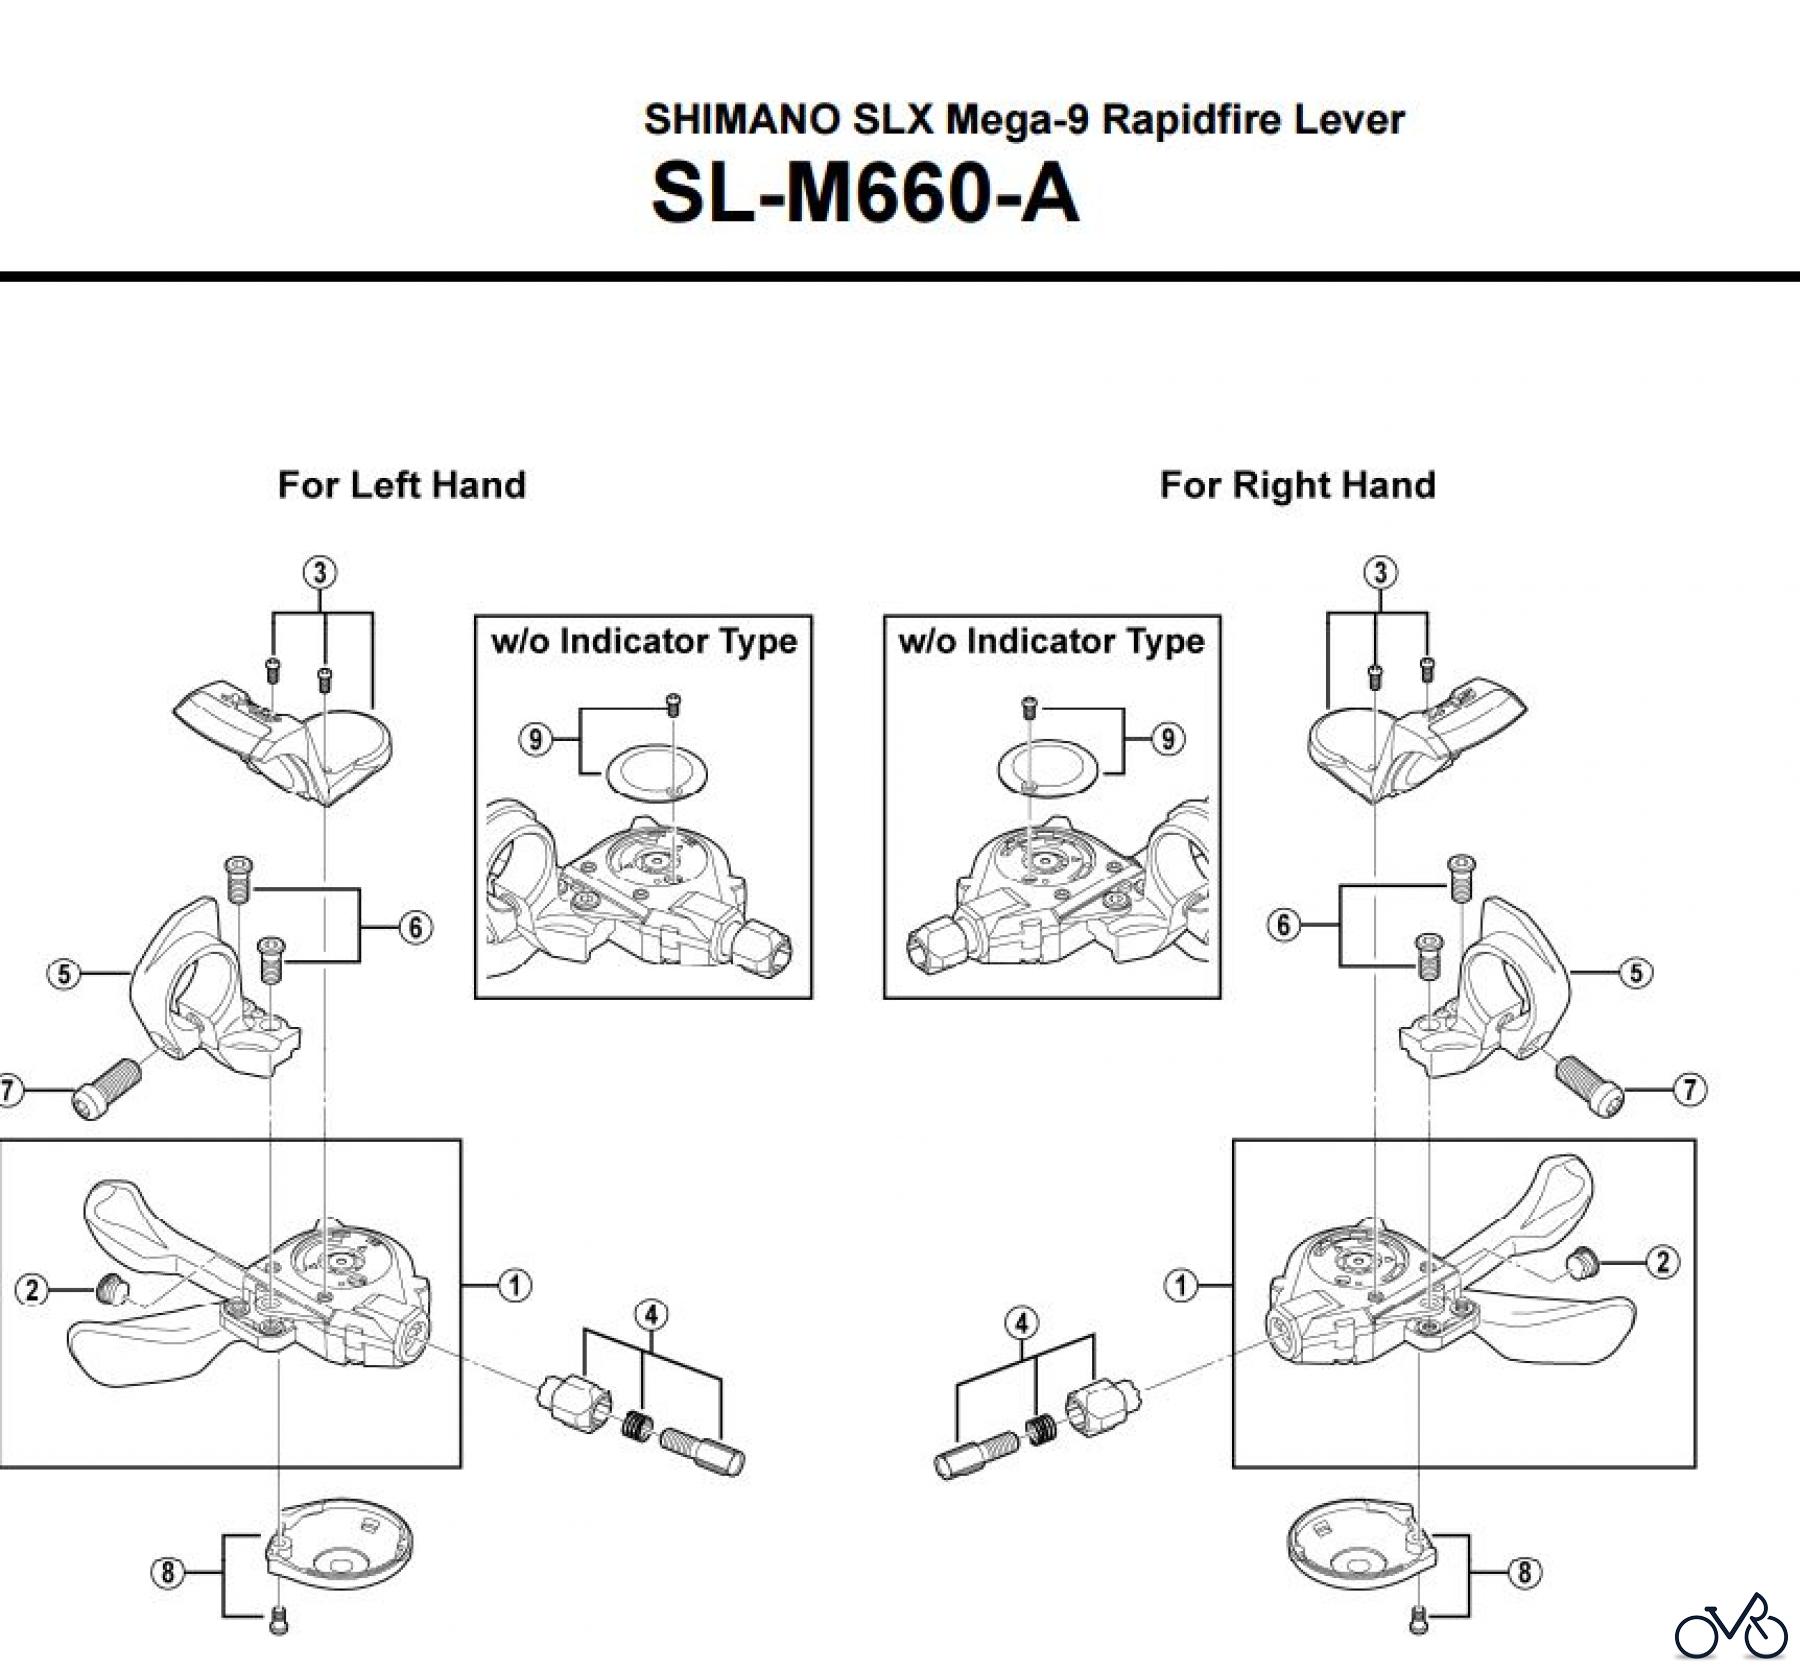  Shimano SL Shift Lever - Schalthebel SL-M660-A SHIMANO SLX Mega-9 Rapidfire Lever